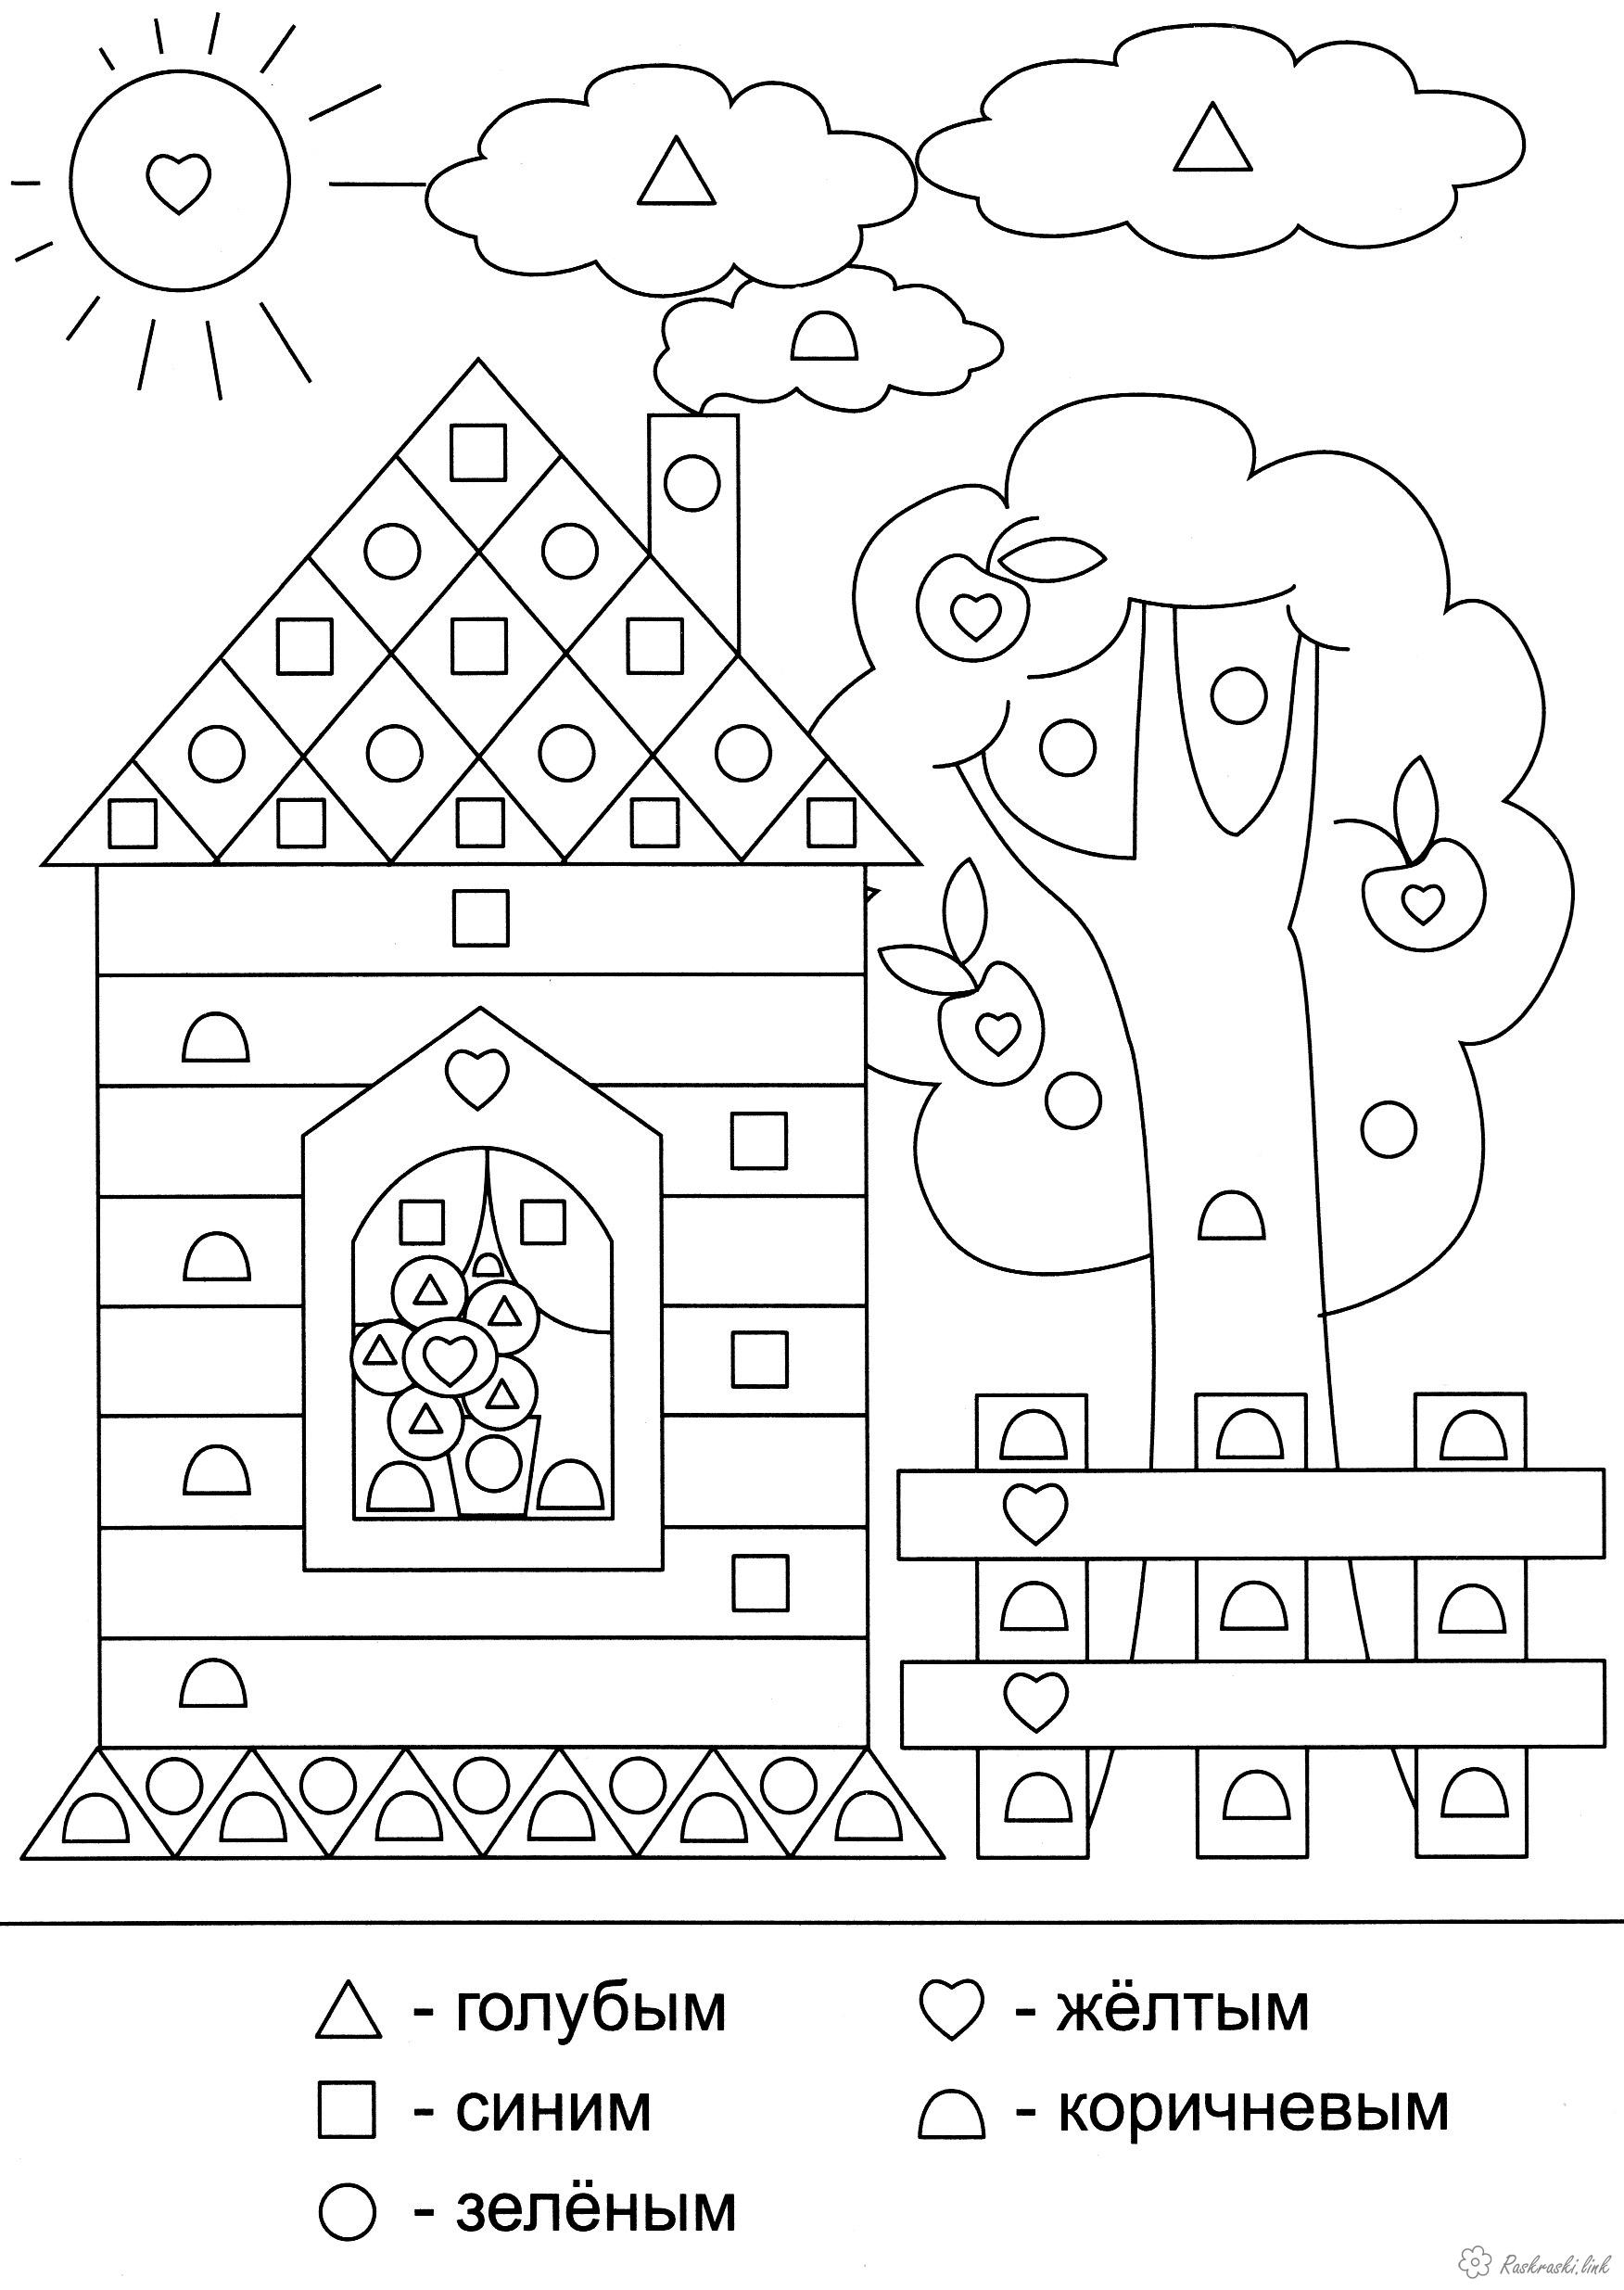 Розмальовки коло сонце будинок паркан дерево облок трикутник квадрат коло